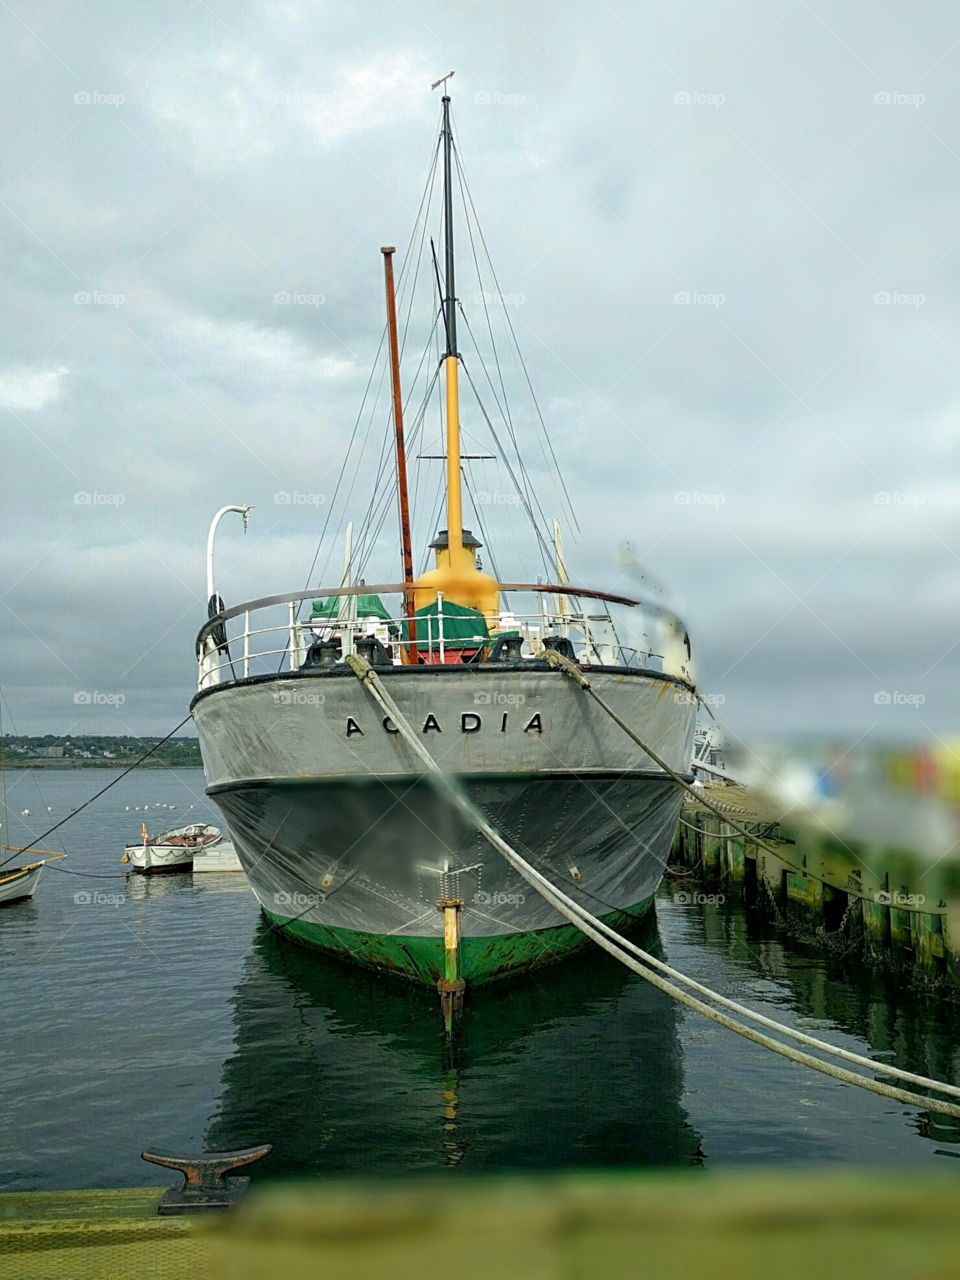 The Acadia